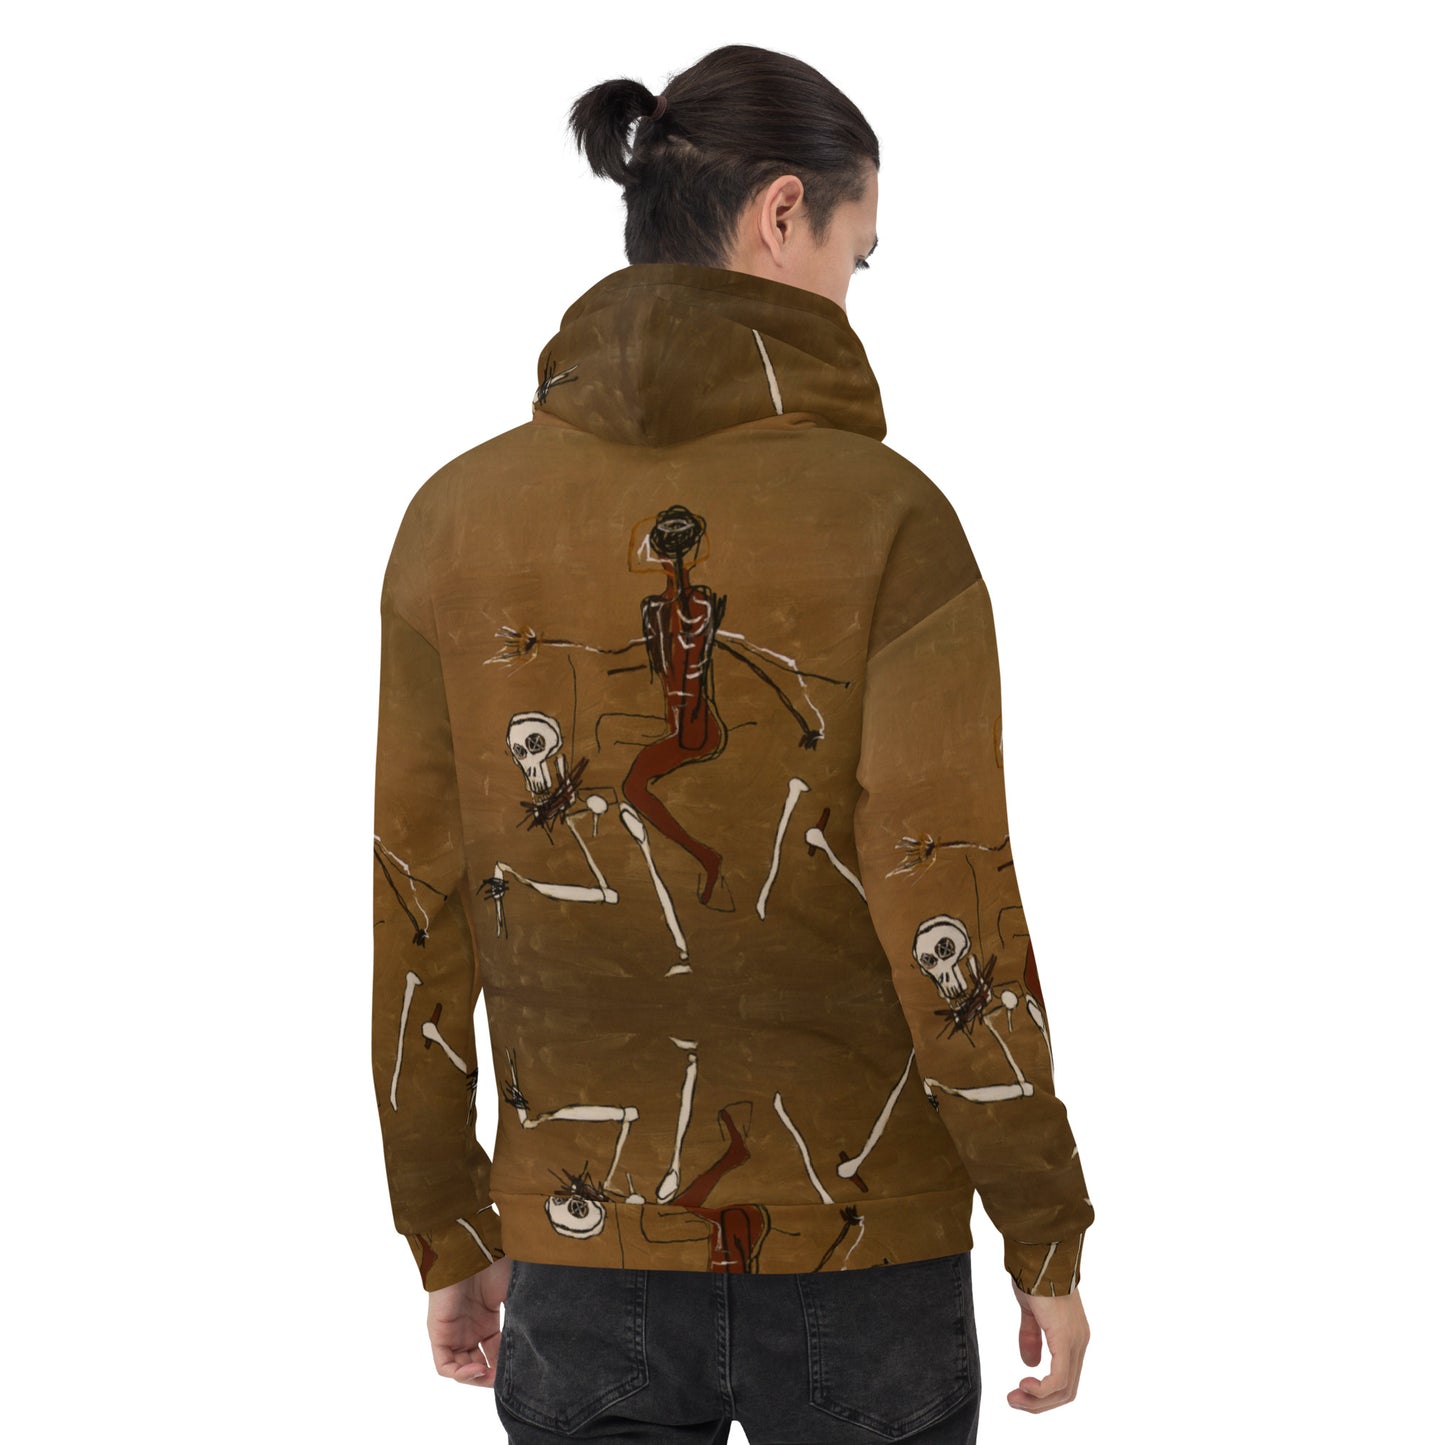 Jean-Michel Basquiat "Riding With Death" Artwork Printed Premium Streetwear Sweatshirt Hoodie Harajuku Graffiti